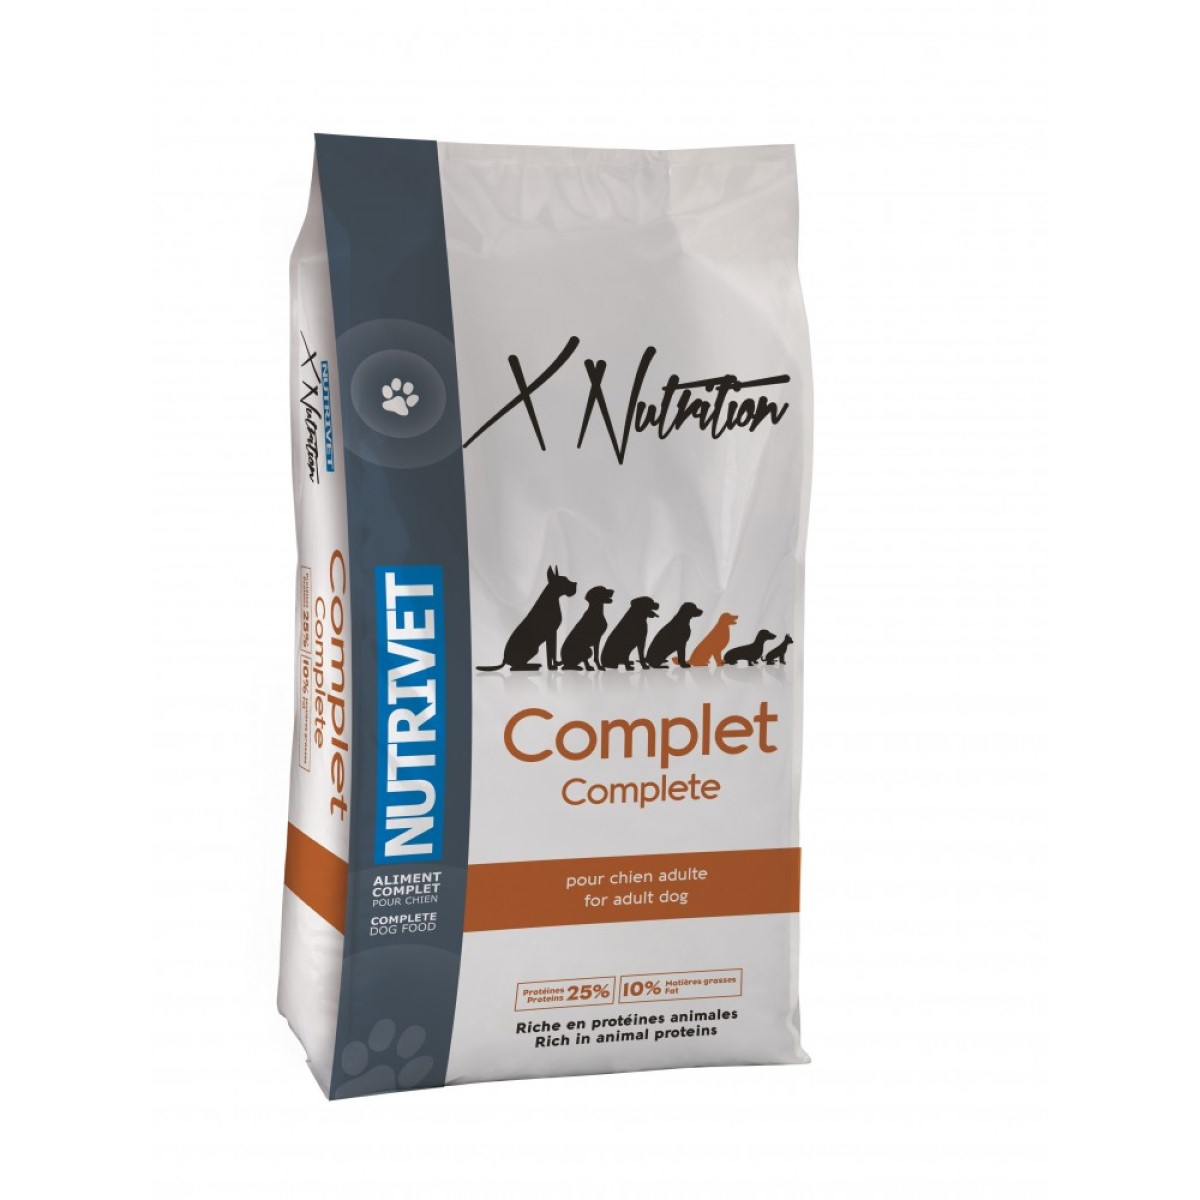 NUTRIVET Xnutrition Complete 25/10 für Hunde